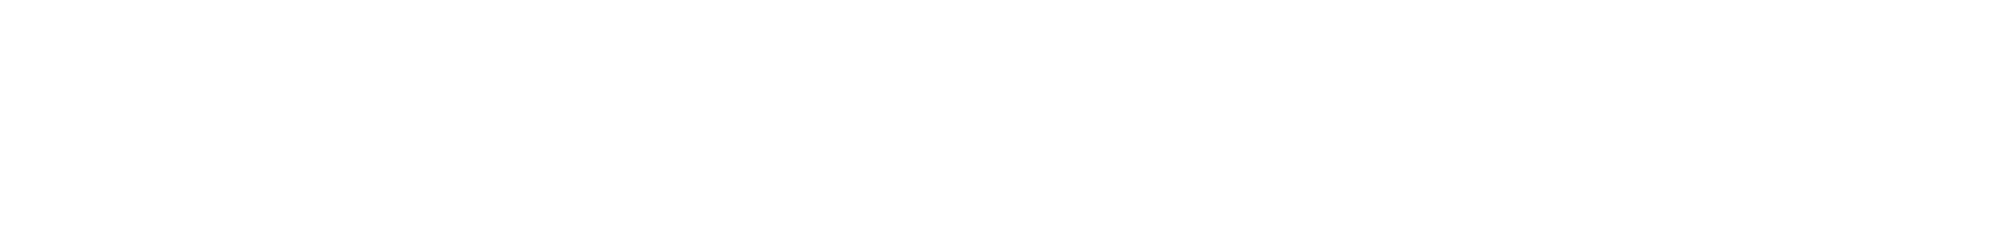 NAMI X Delta Sigma Theta Sorority, Inc.